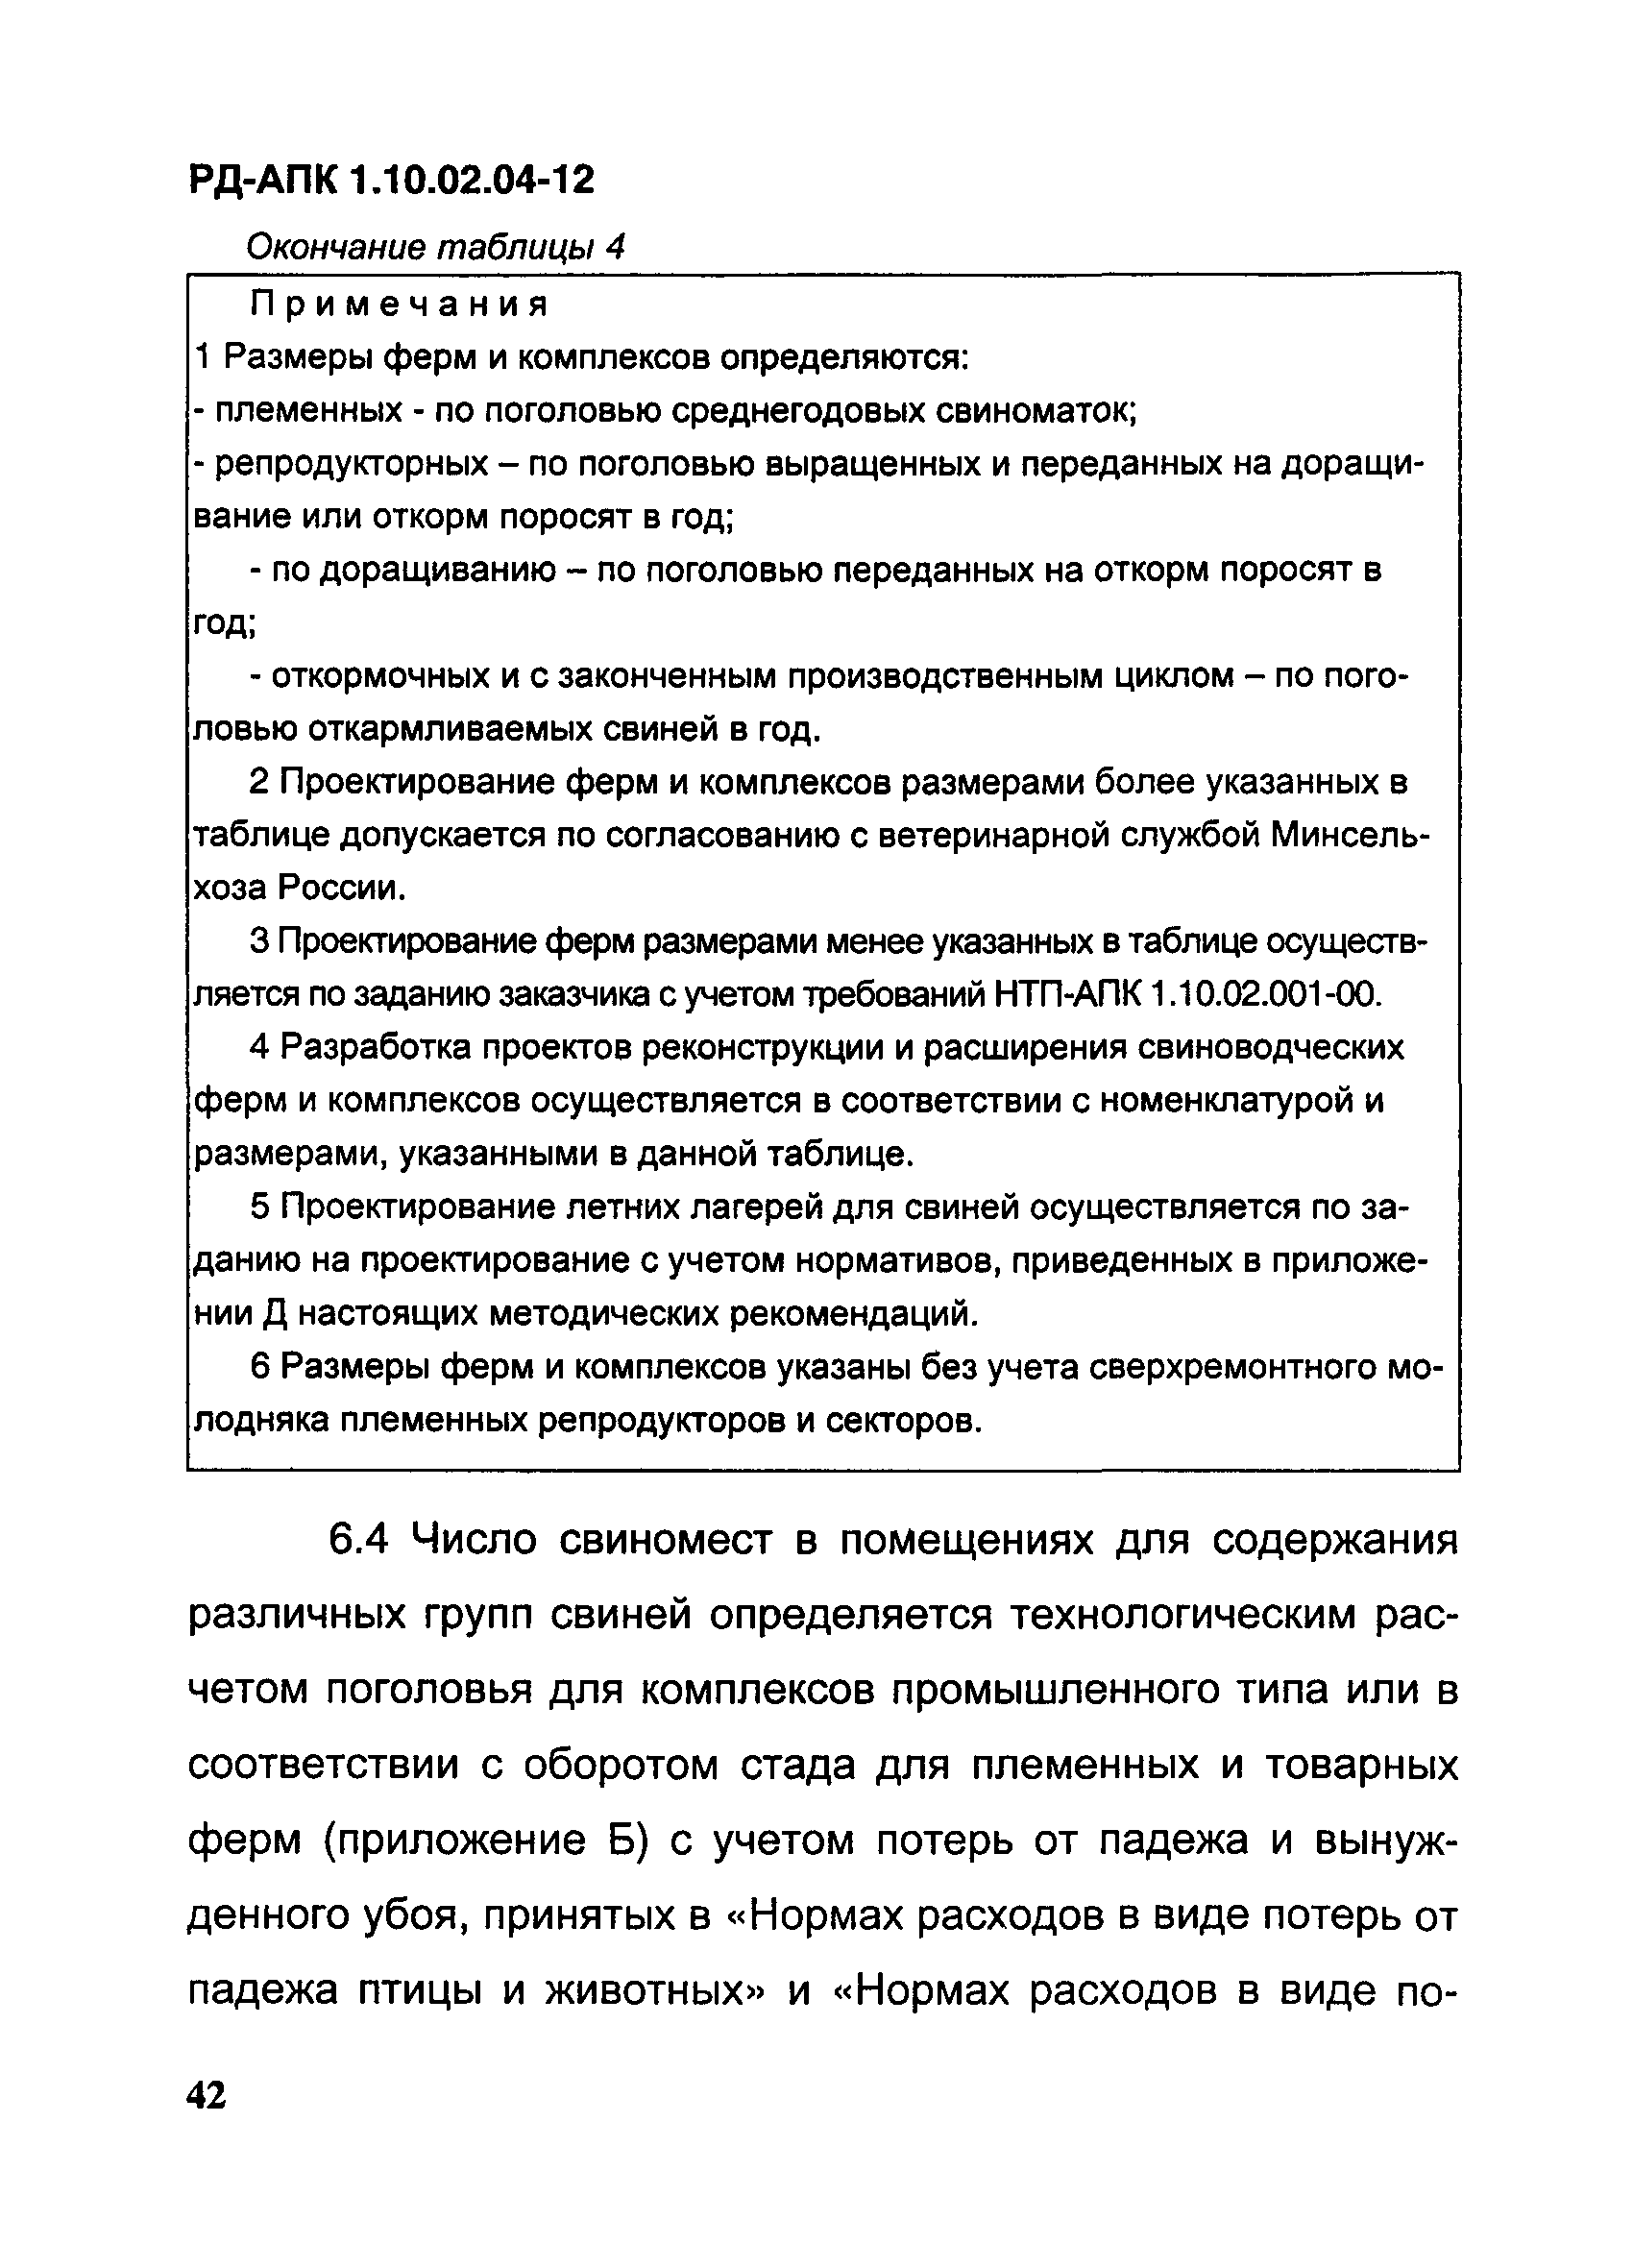 РД-АПК 1.10.02.04-12